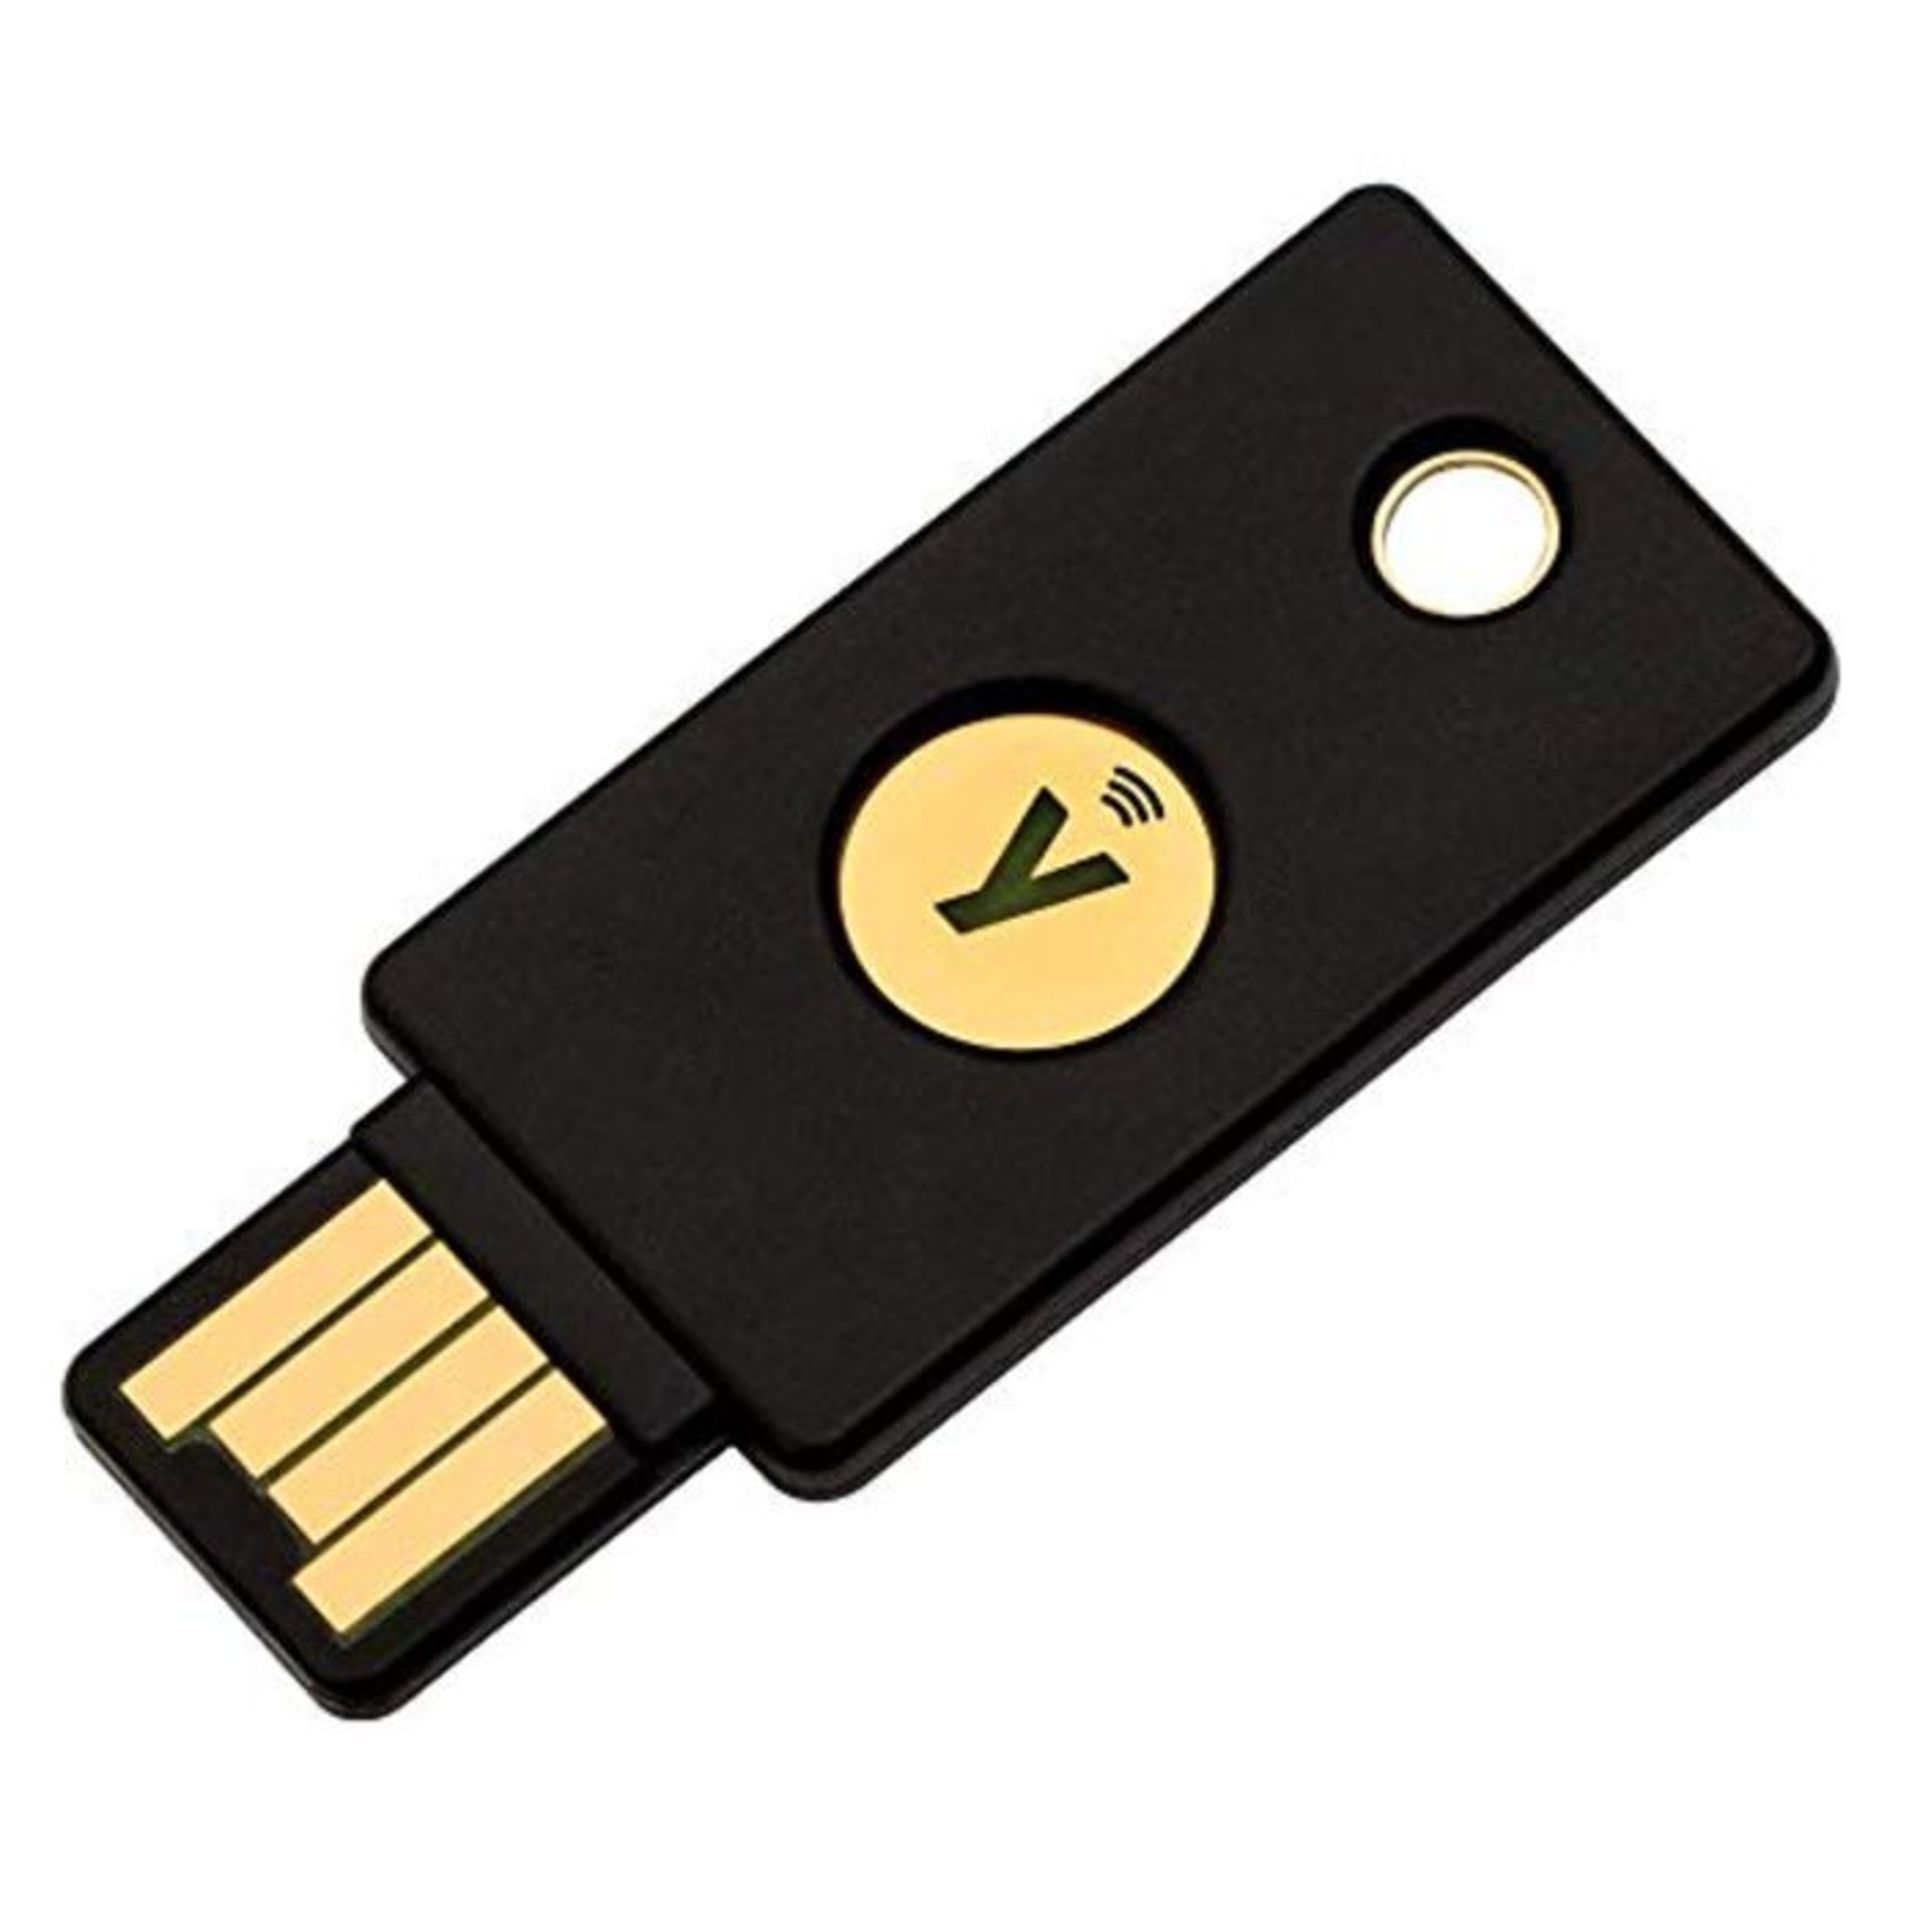 Yubico YubiKey 5 NFC, 2 Pasos de autenticaciÃ³n USB y NFC Security Key, Compatible c